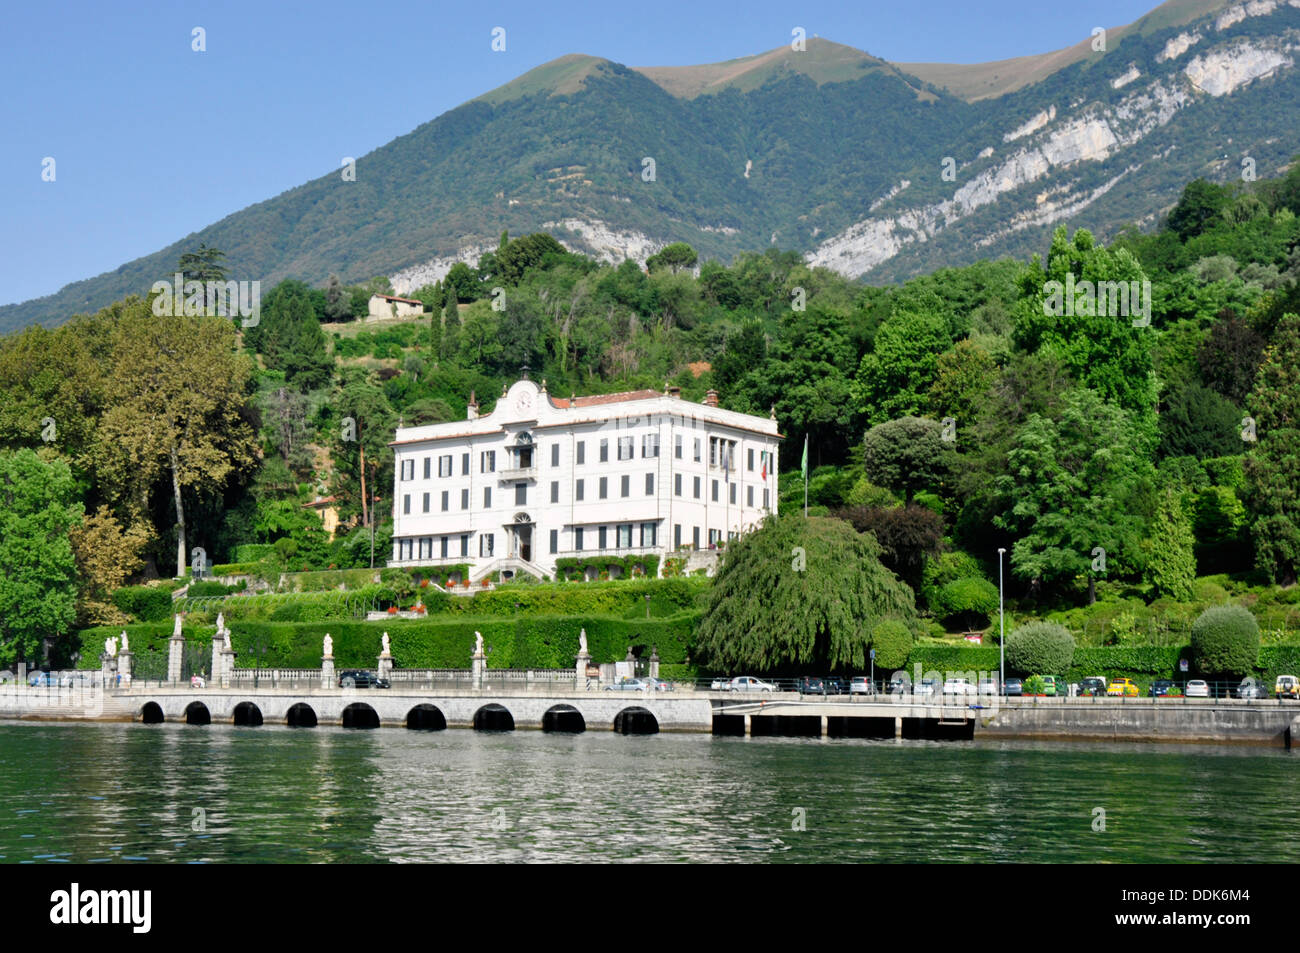 Italy - Lake Como - lake view of  beautiful Villa Carlotta - Tremezzo - circa 1745 - famous for botanical gardens and museum Stock Photo